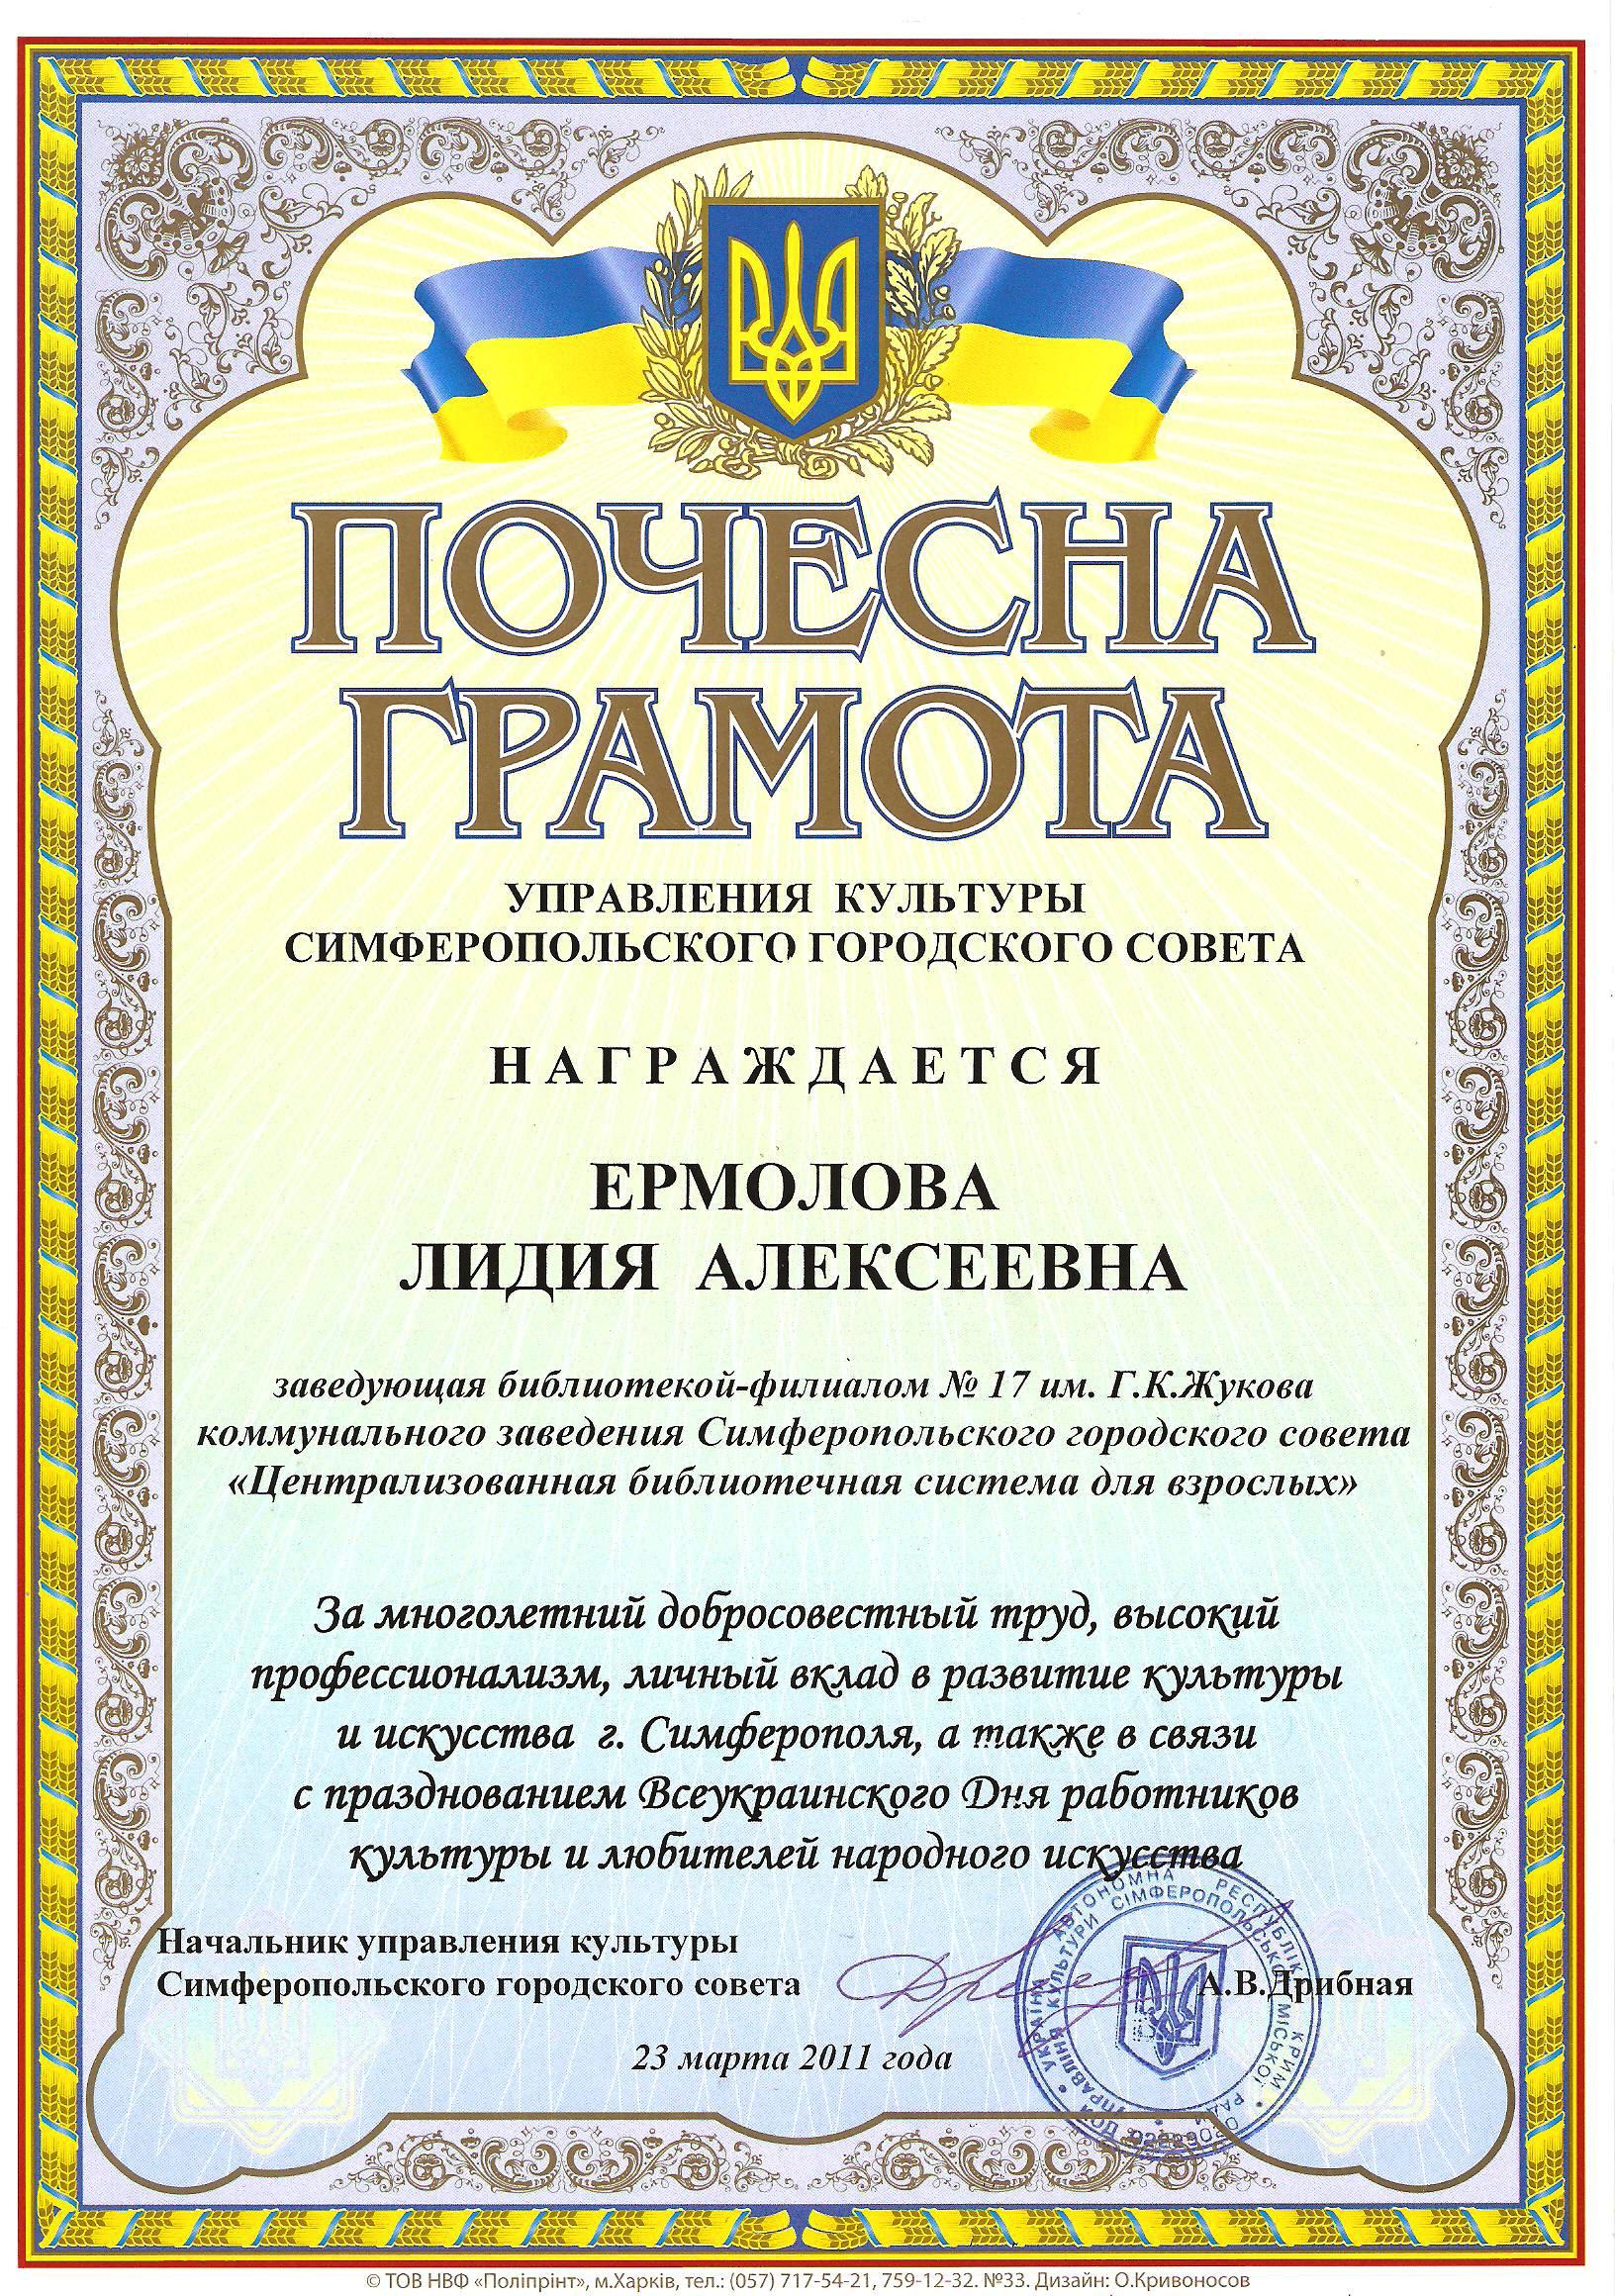 ермолова,лидия алексеевна,библиотека-филиал, грамота,2010